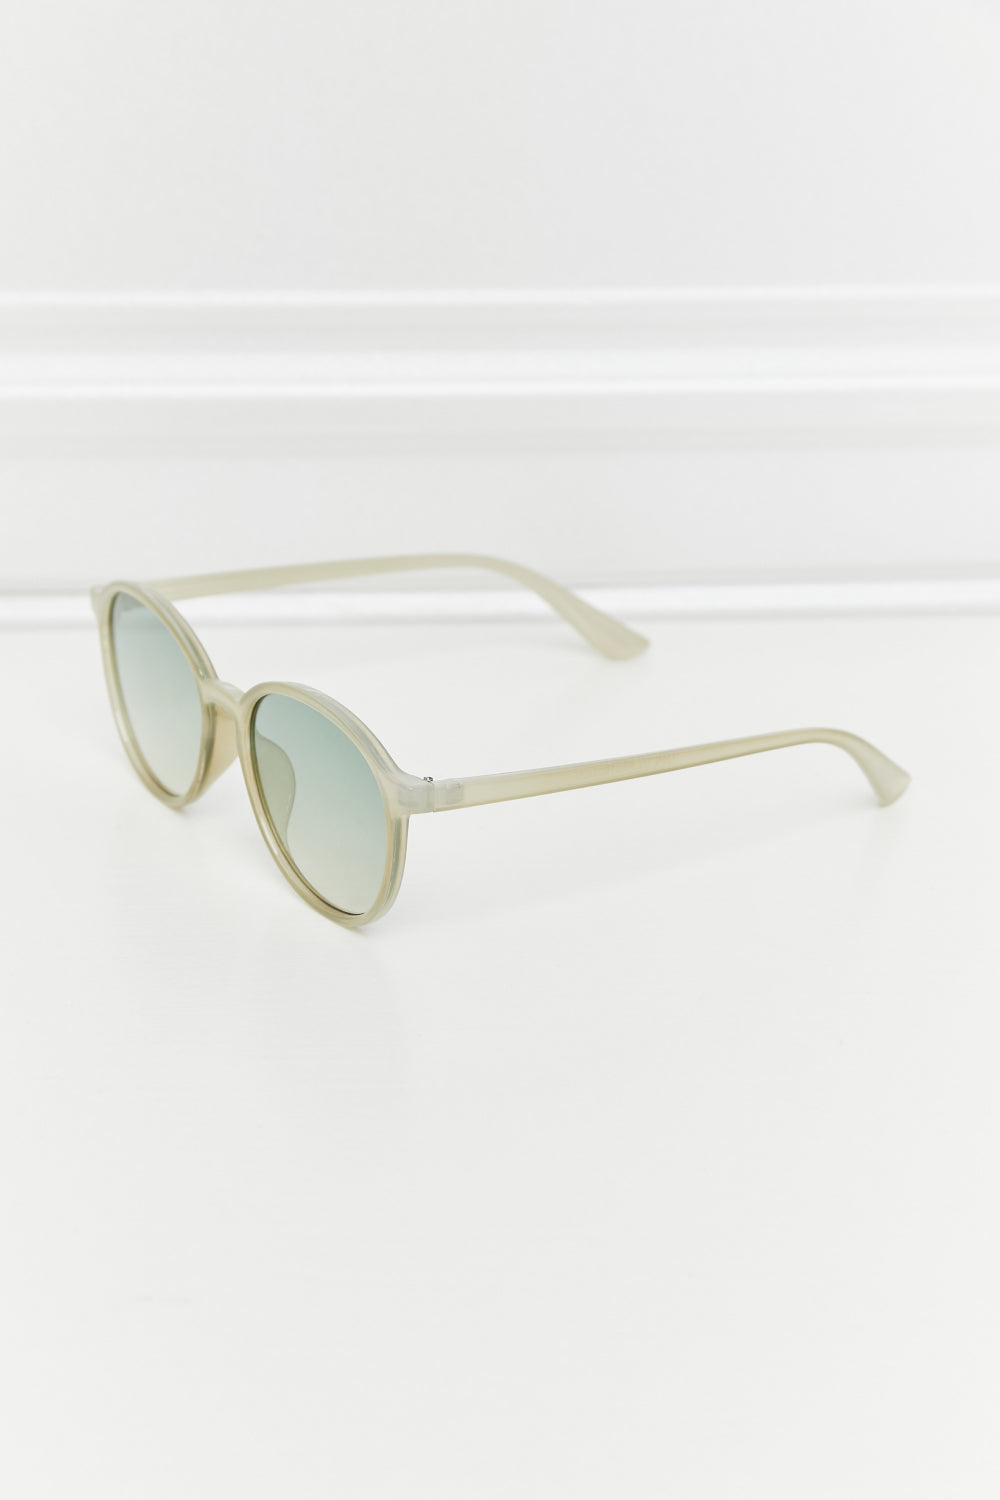 Full Rim Polycarbonate Frame Sunglasses Mist Green One Size Sunglasses by Vim&Vigor | Vim&Vigor Boutique